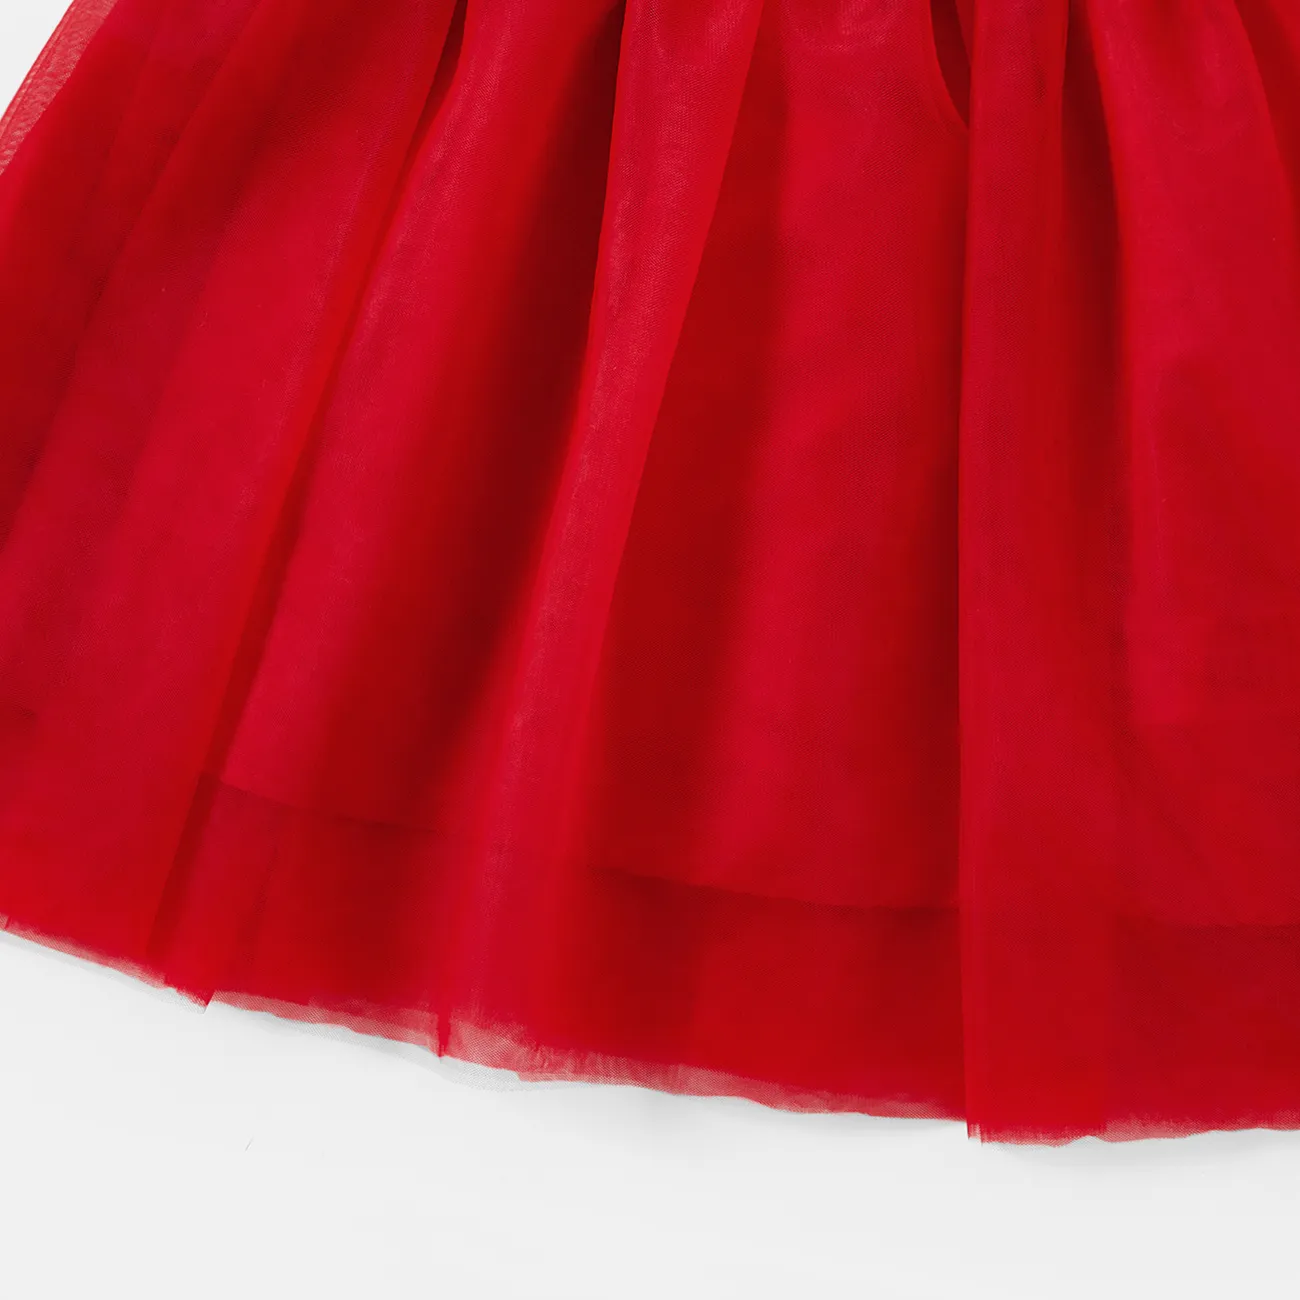 Muttertag Familien-Looks Kurzärmelig Familien-Outfits Sets rot/weiß big image 1